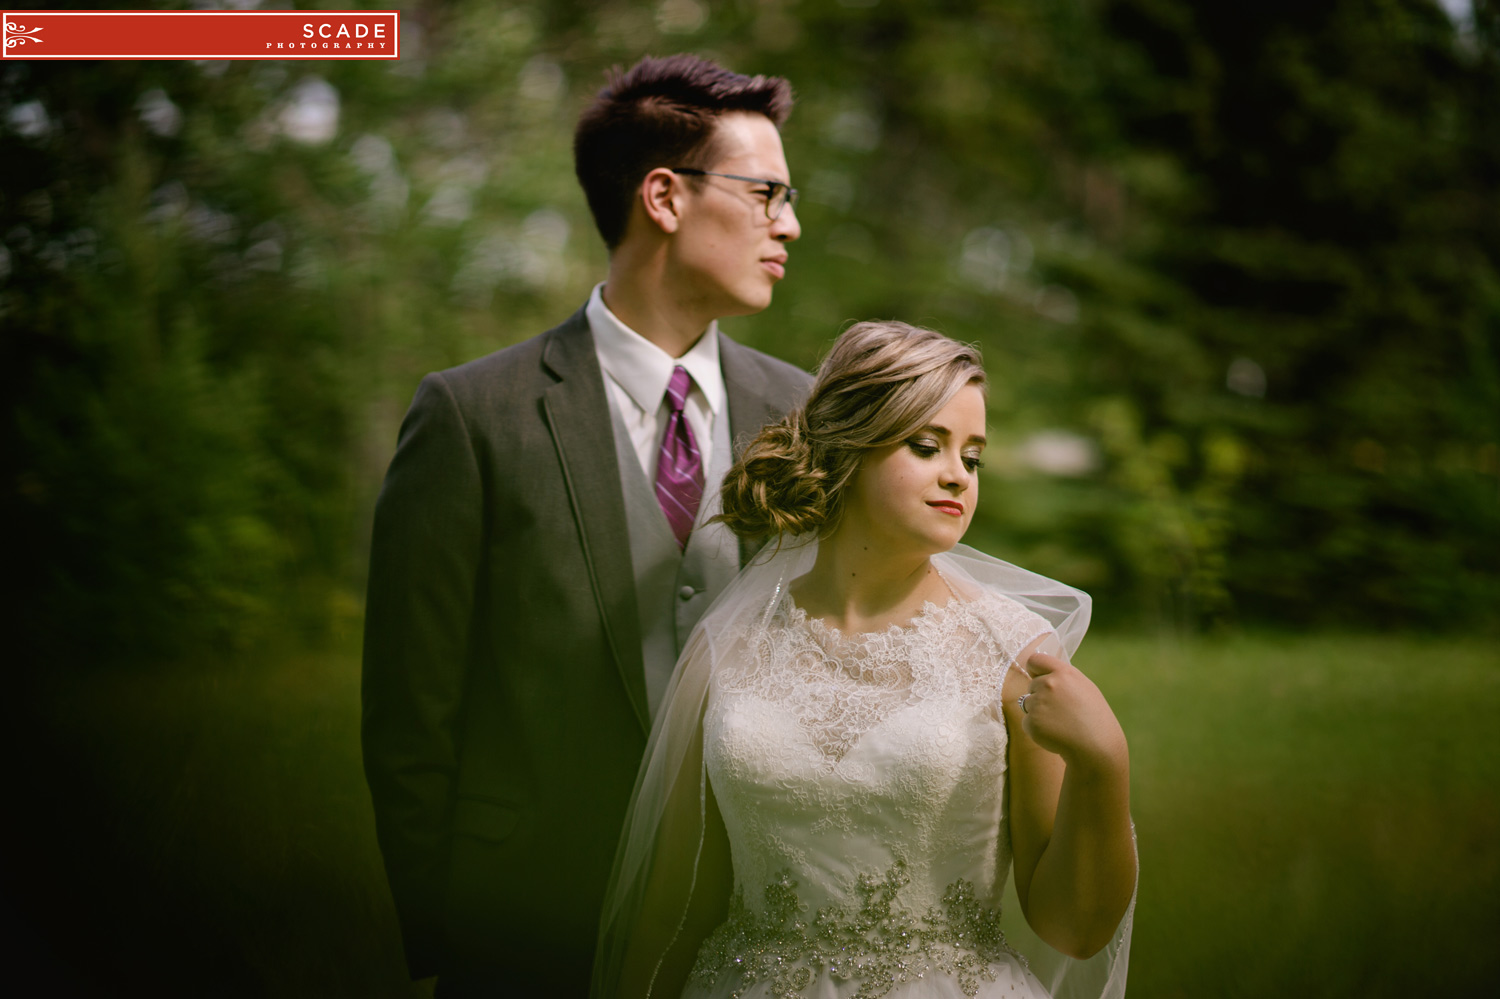 Edmonton Wedding Photographers - Taylor and Natalia